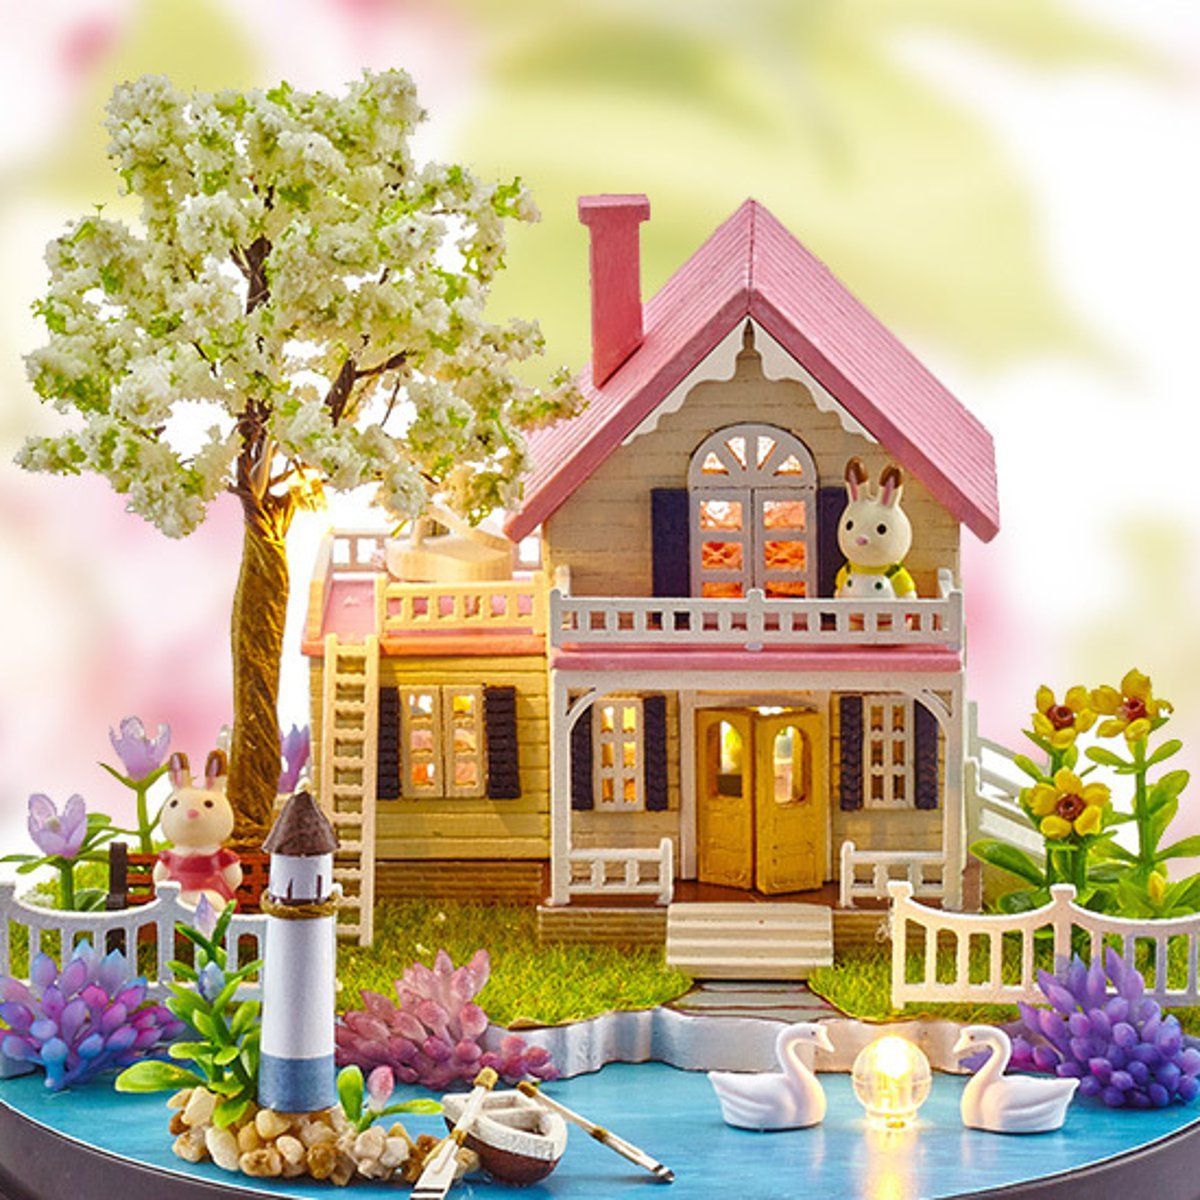 DIY-Music-Box-Dolls-House-Dollhouse-Handmade-Miniature-Kids-Kits-Toy-Gift-1350408